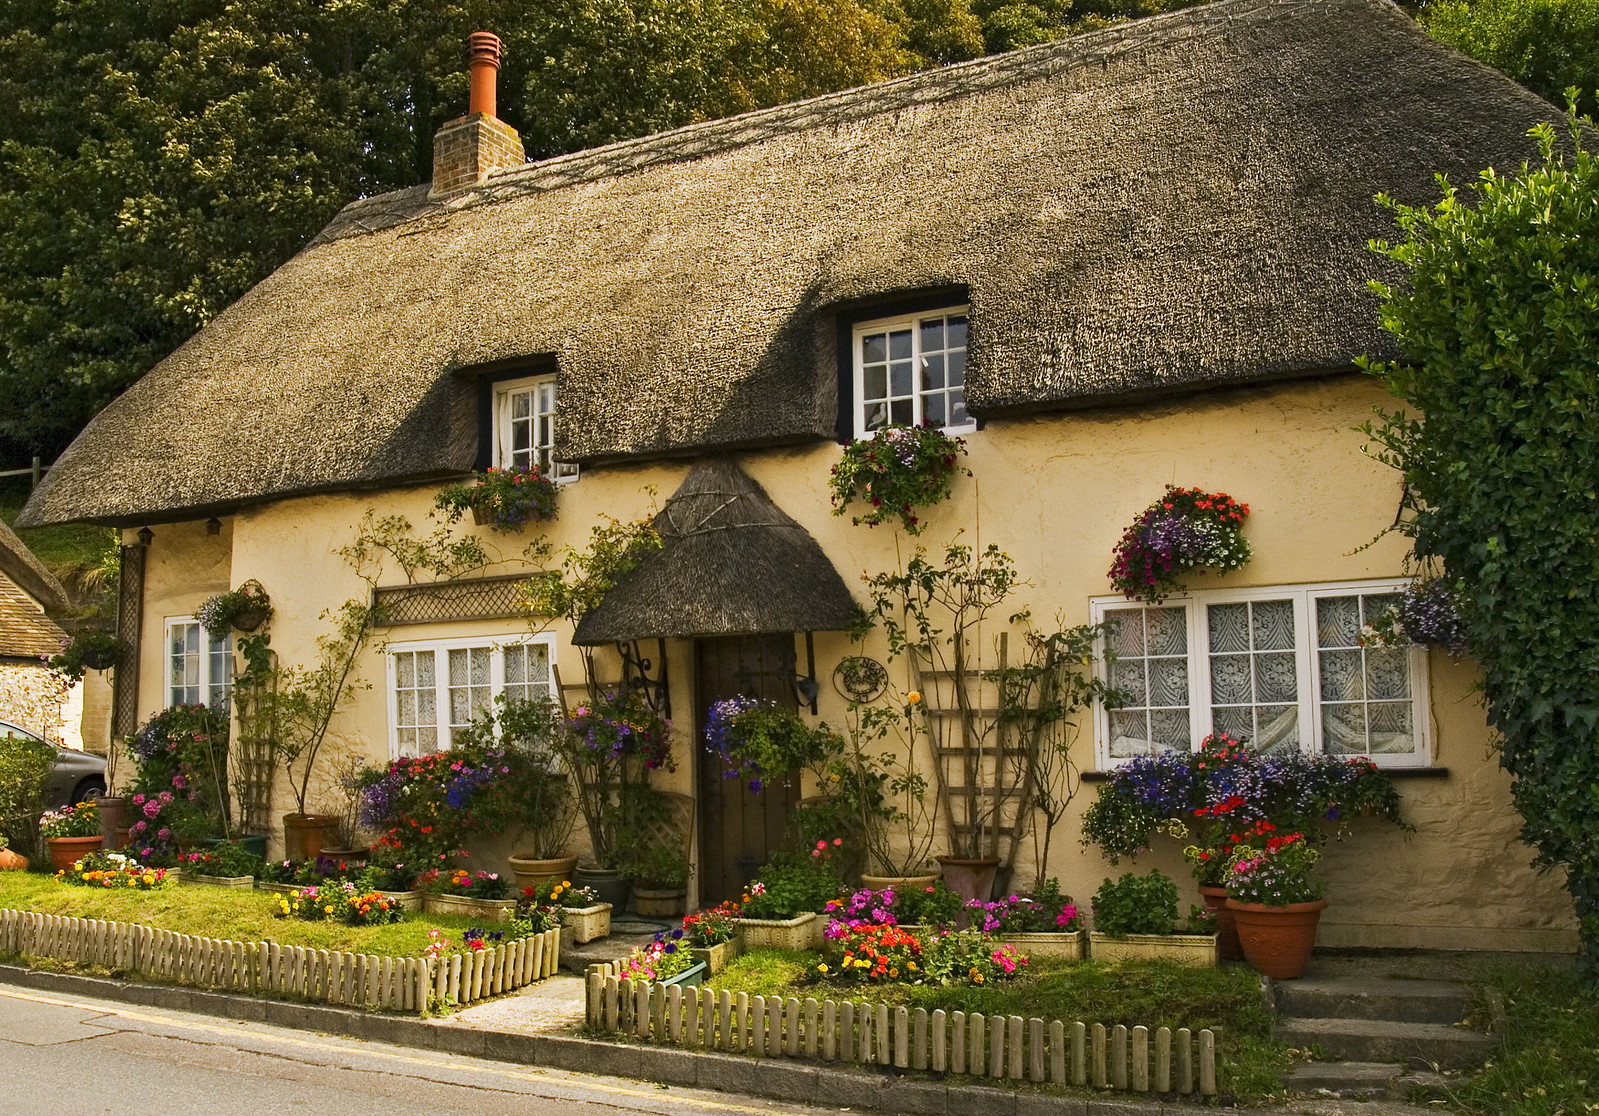 Cottage at West Lulworth, Dorset. Credit Anguskirk